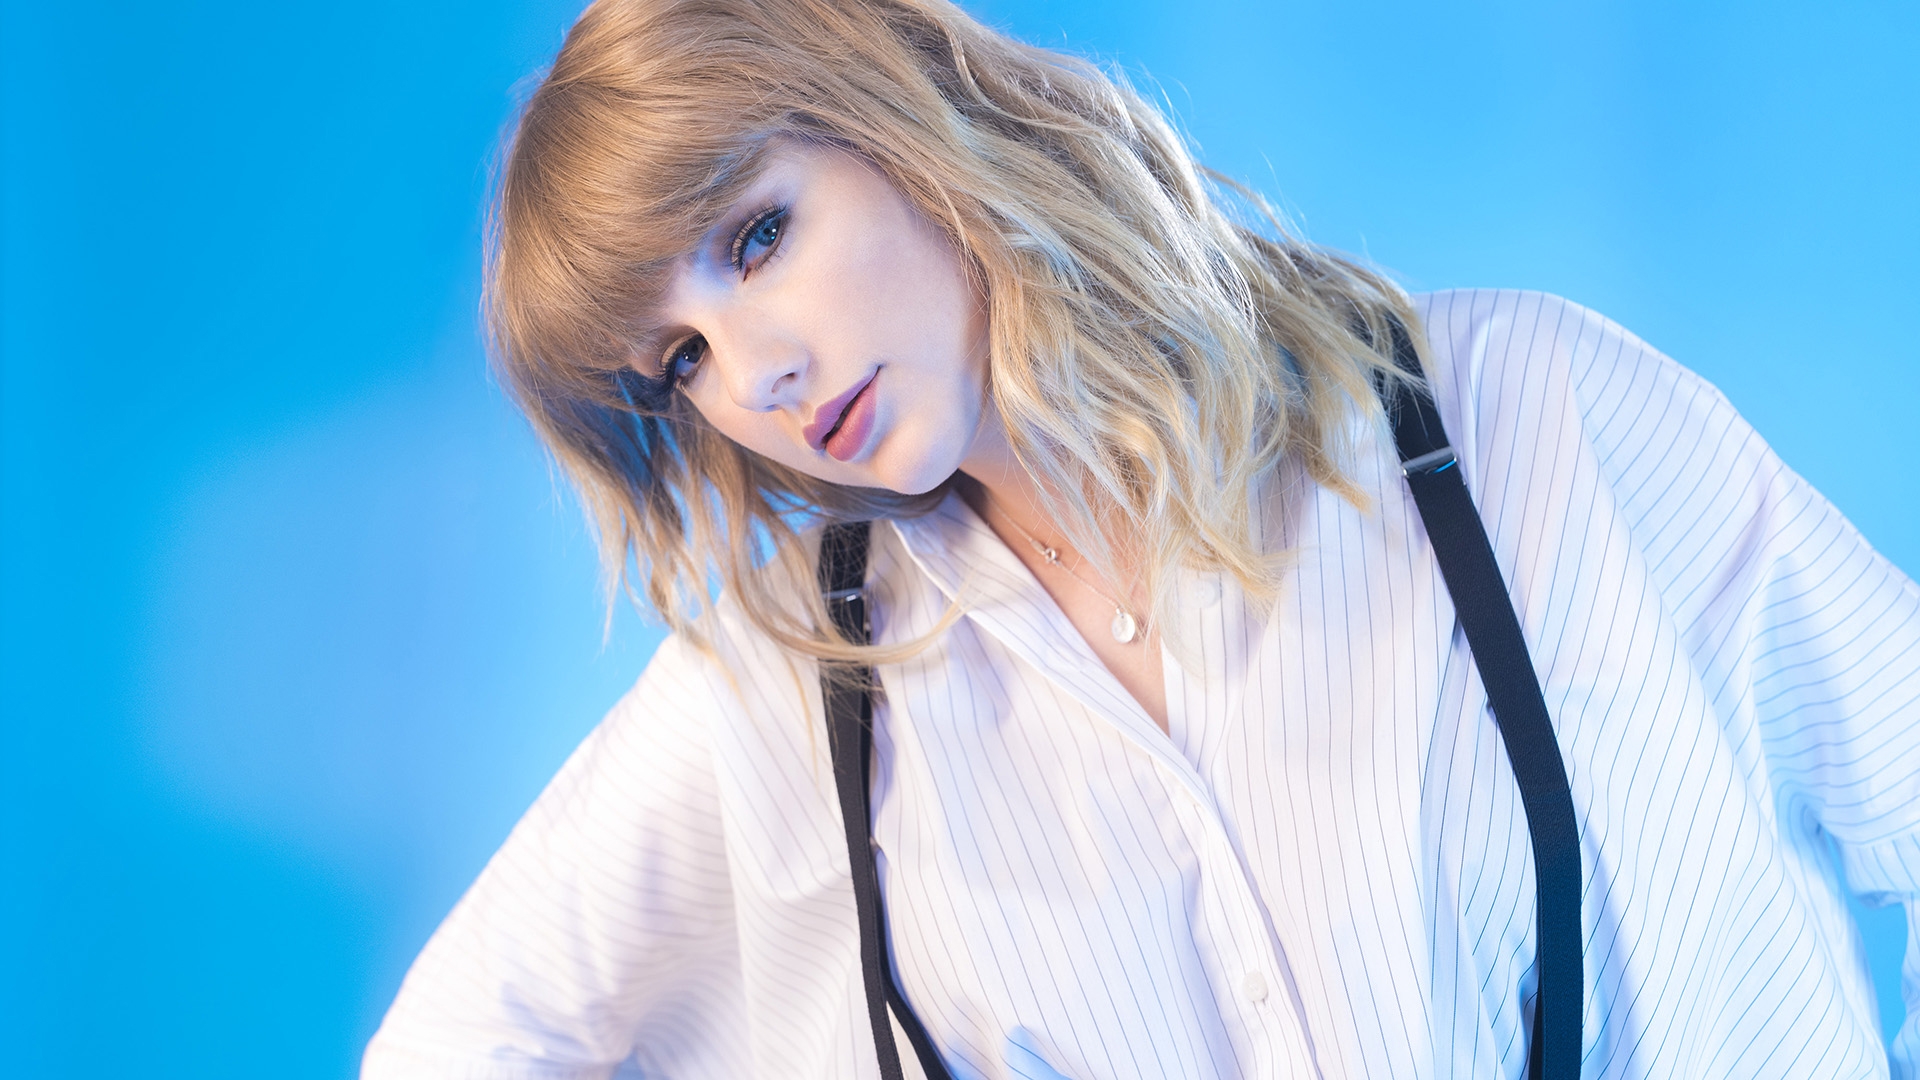 Download 1920x1080 Taylor Swift, Blonde, Singer, Shirt, Blue Eyes Wallpaper for Widescreen